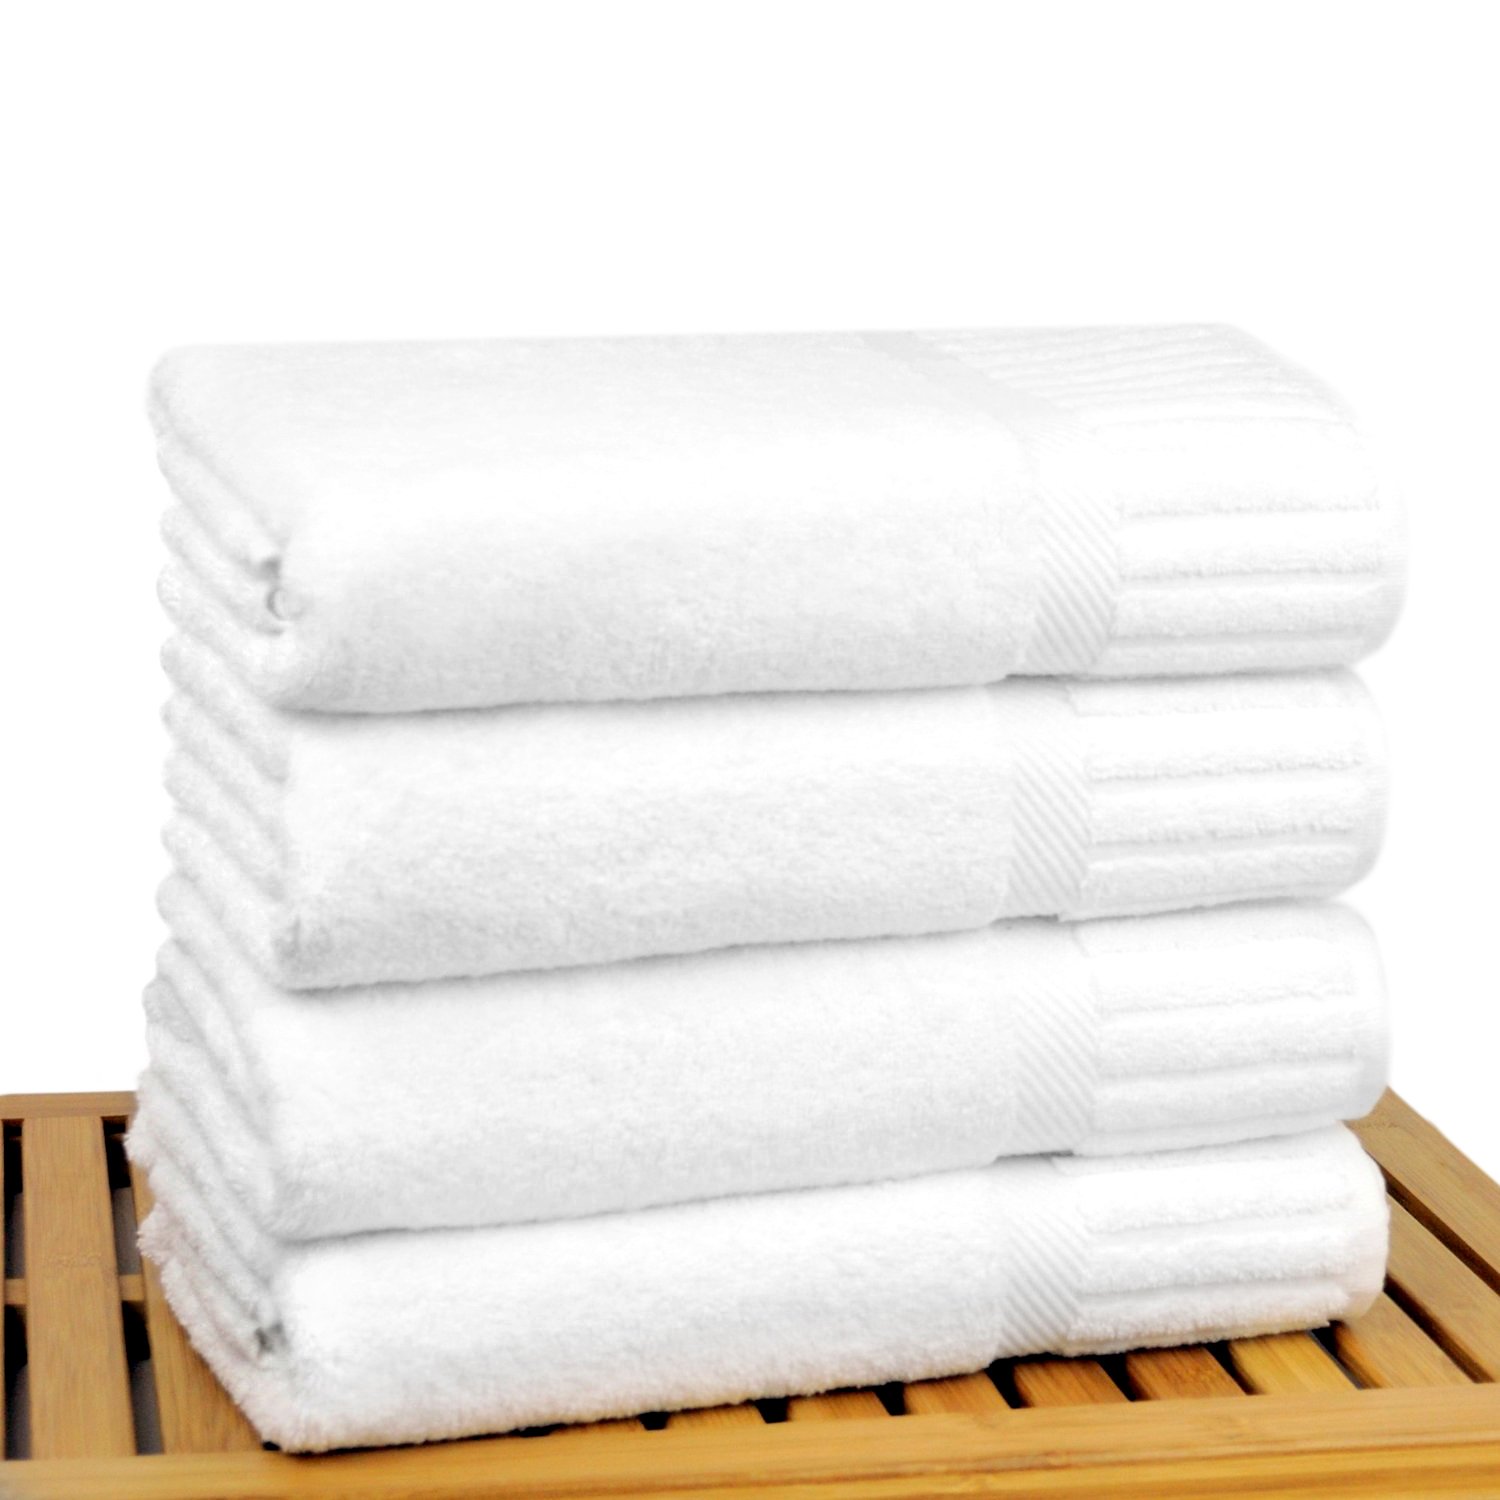 30" x 58" - 18 lbs/doz - %100 Turkish Cotton White Bath Towel - Piano Border-Robemart.com